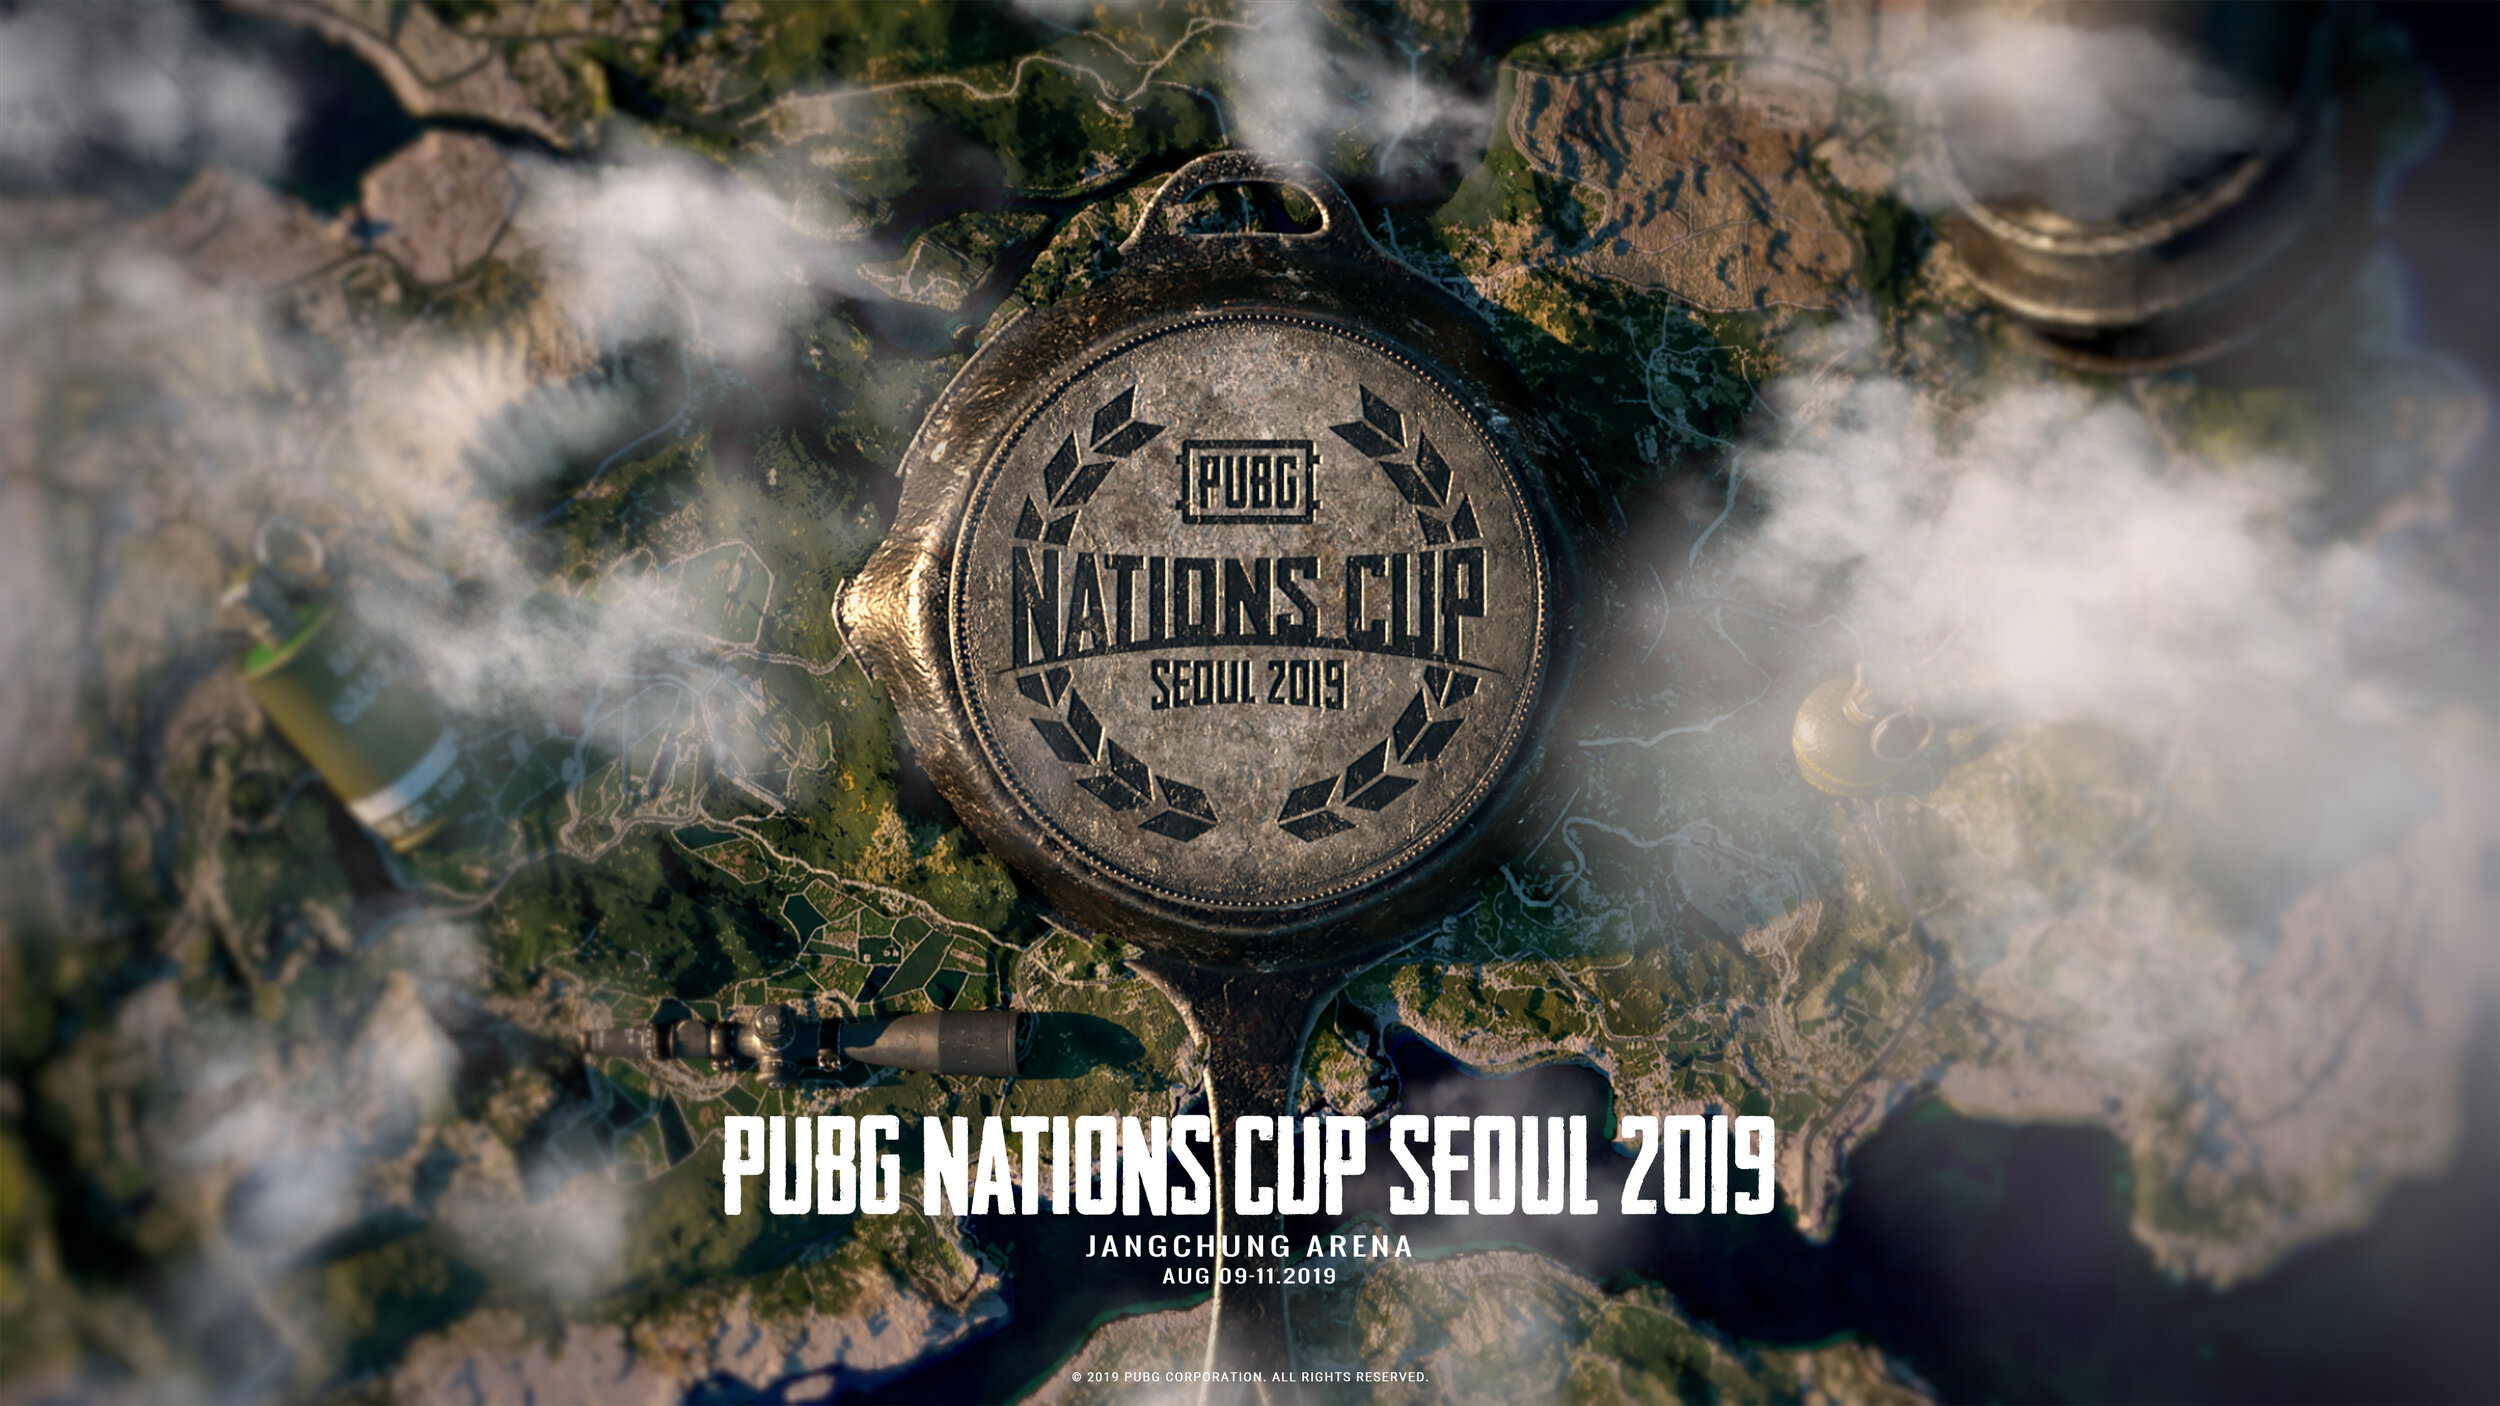 Nation cup 2019 pubg фото 34